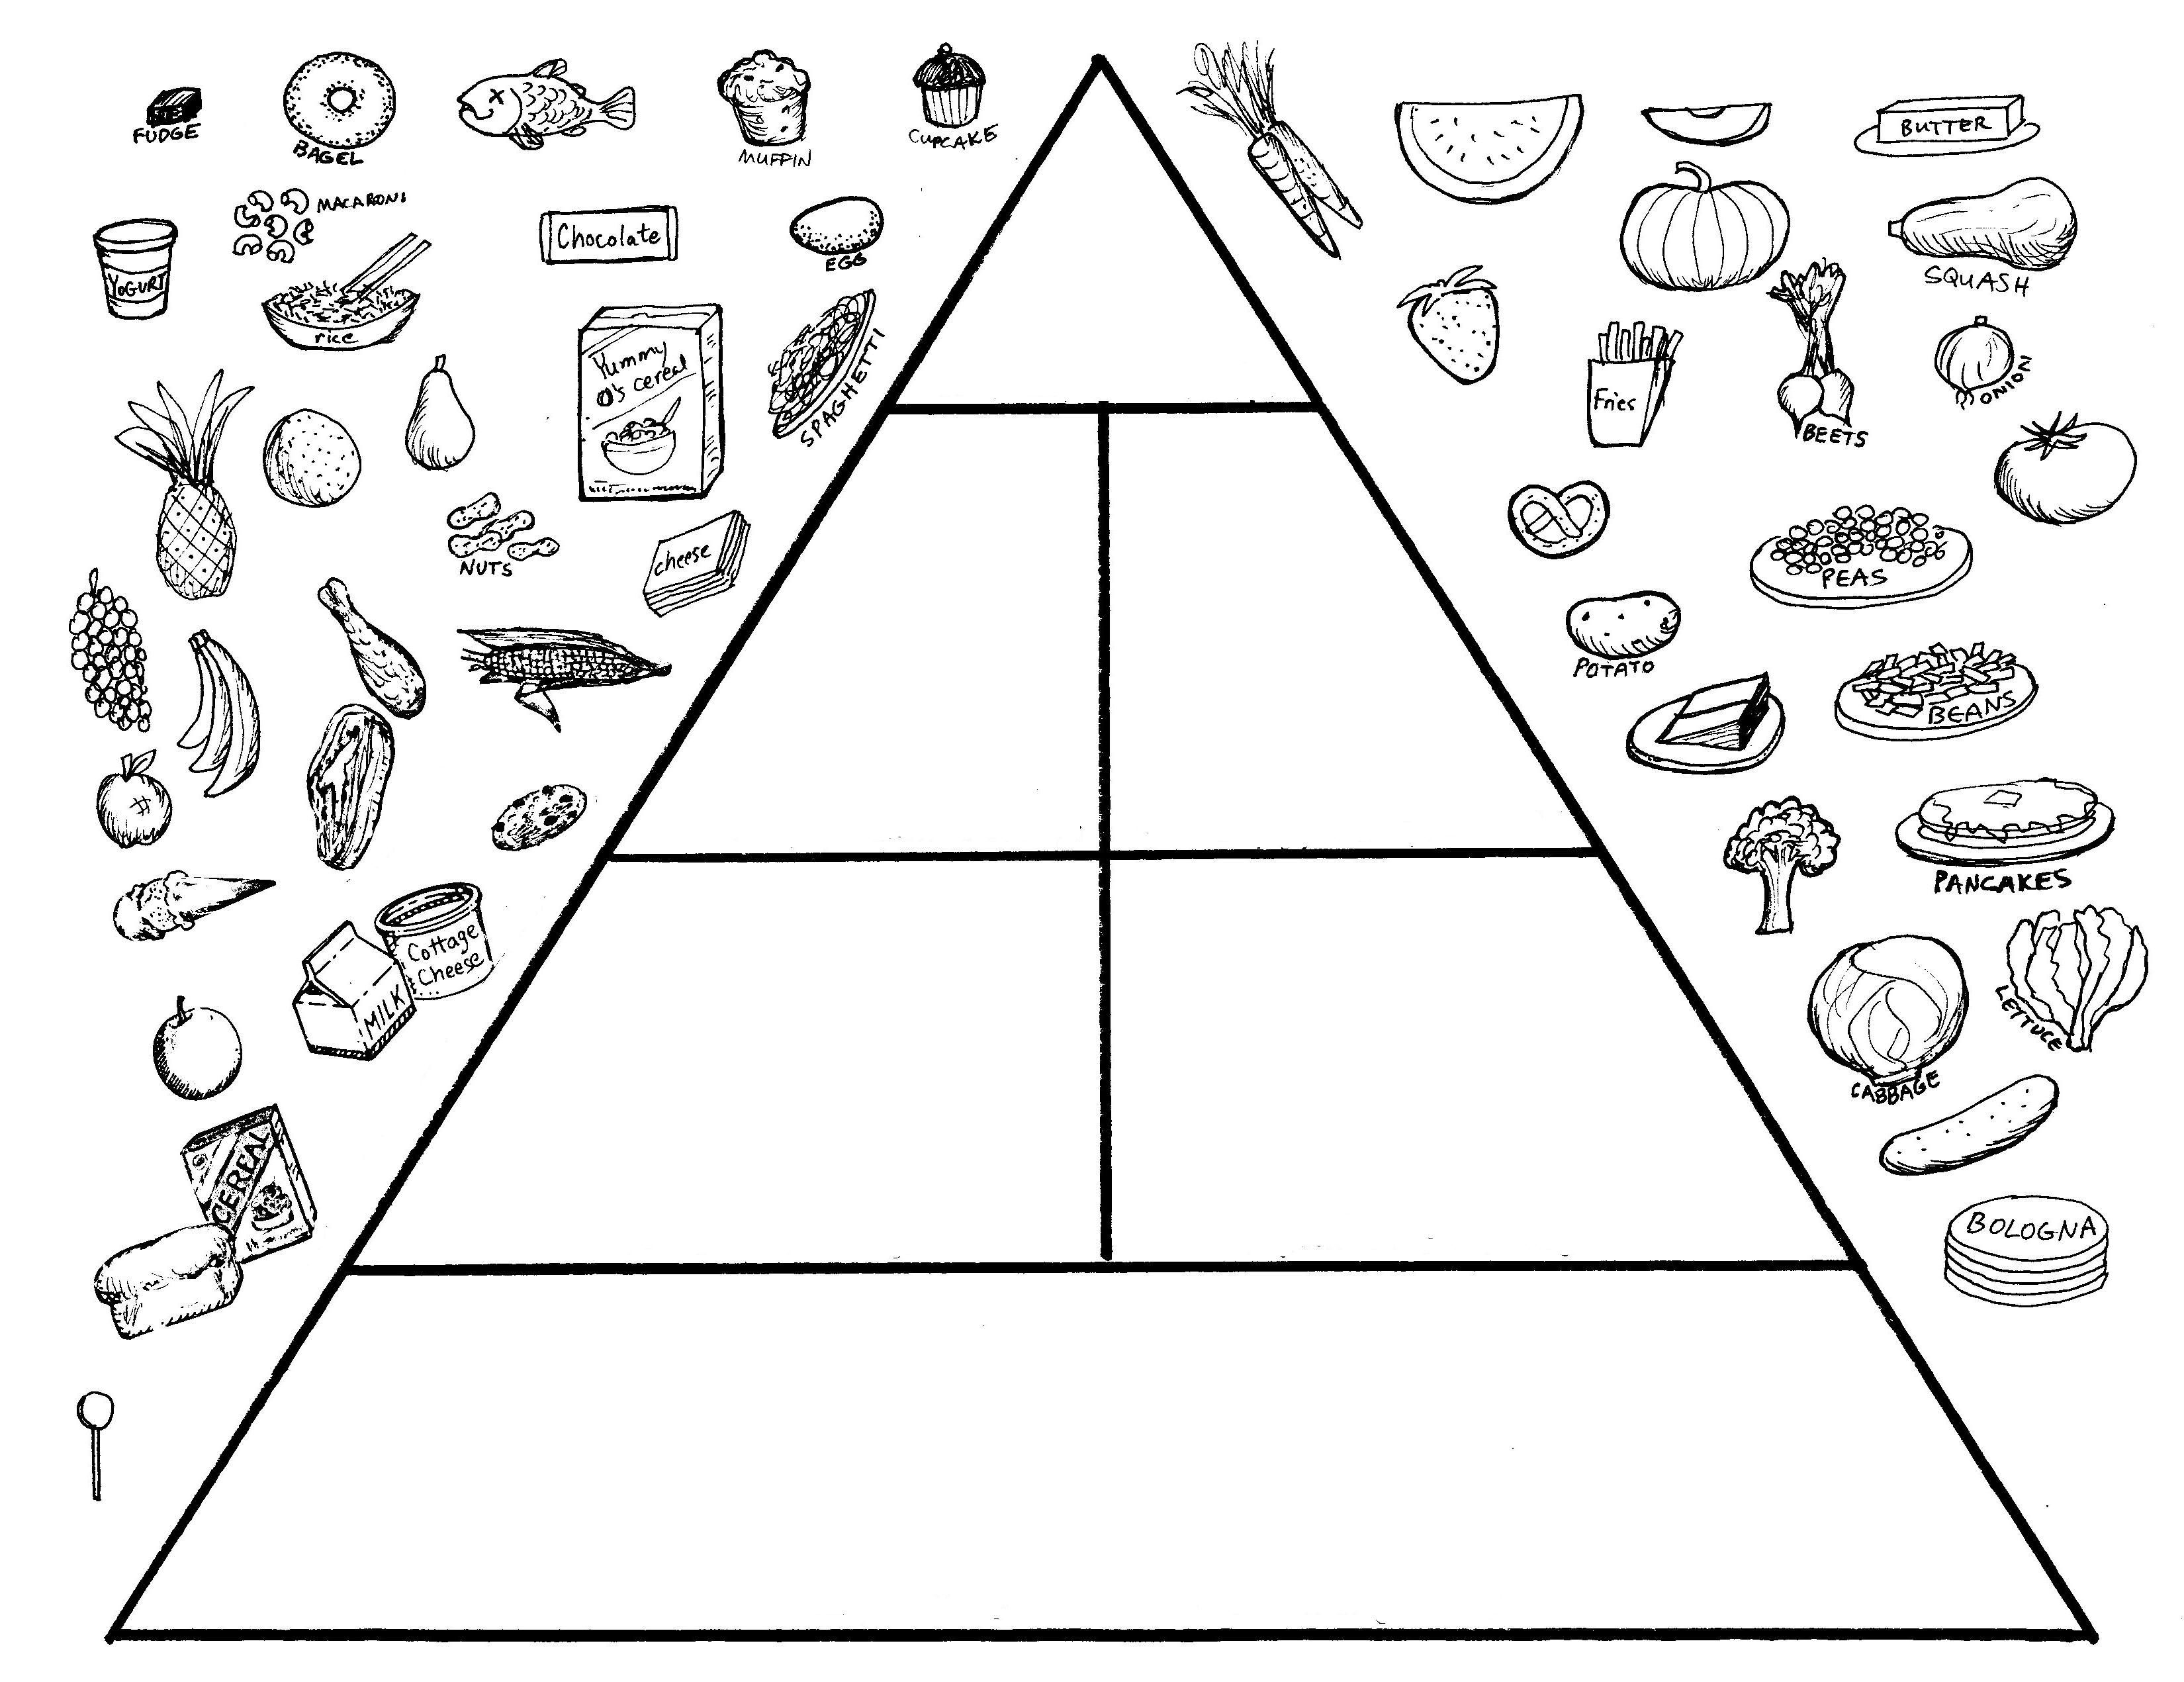 George Washington Worksheets Kindergarten - Google Search - Free Printable Food Pyramid